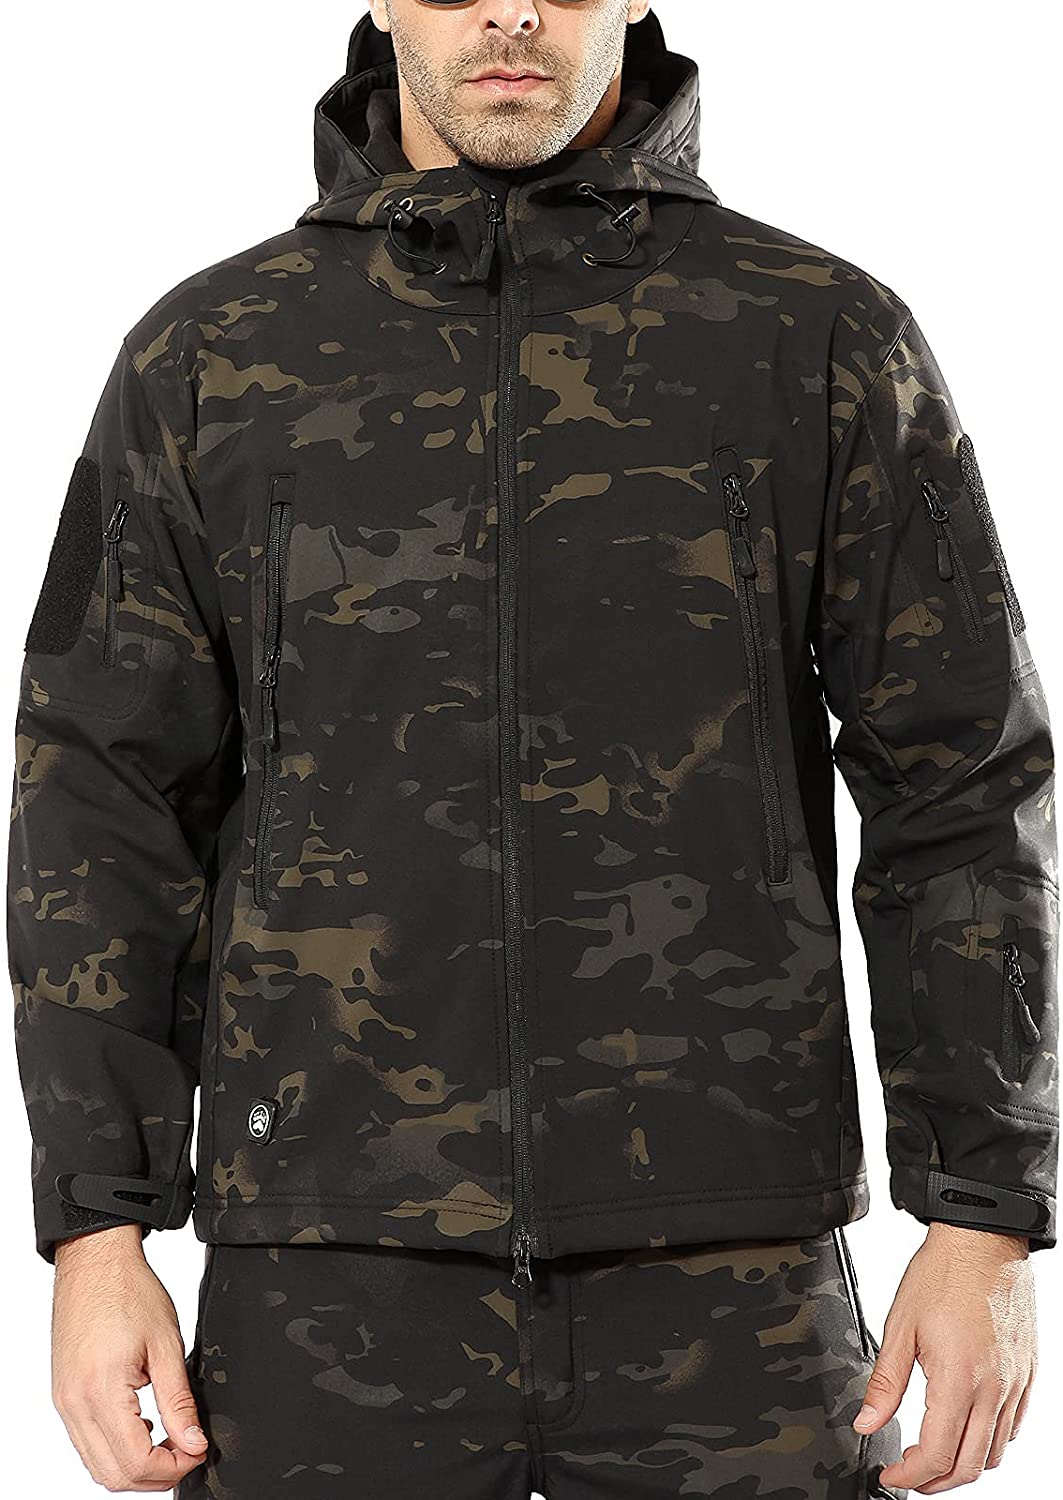 ANTARCTICA Men's Outdoor Waterproof Soft Shell Hooded Military Tactical  Jacket | eBay